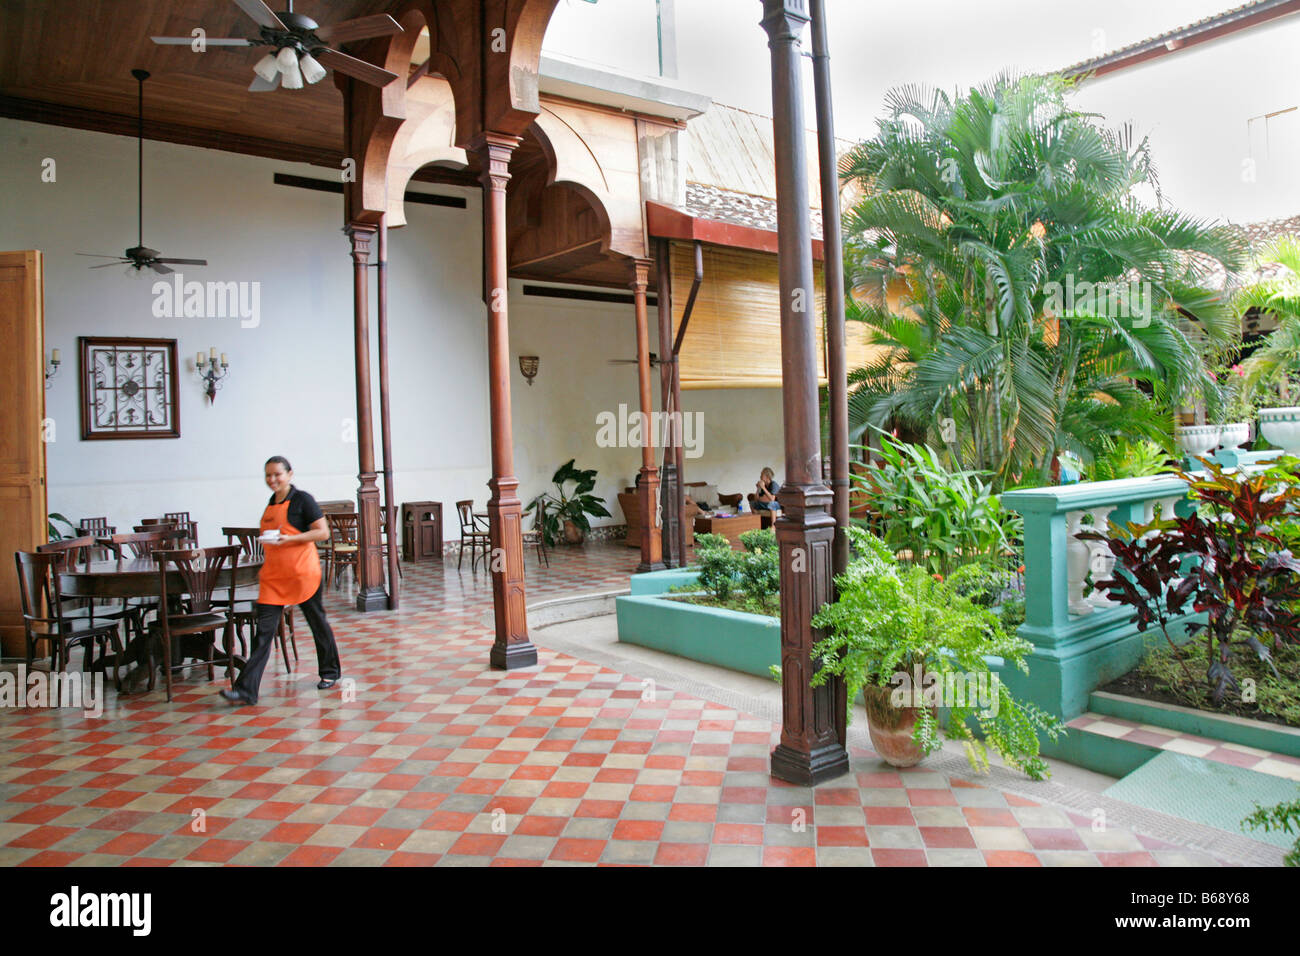 Koloniale inneren Garten Bau und Architektur Calle la Calzada historischen Granada Nicaragua Stockfoto